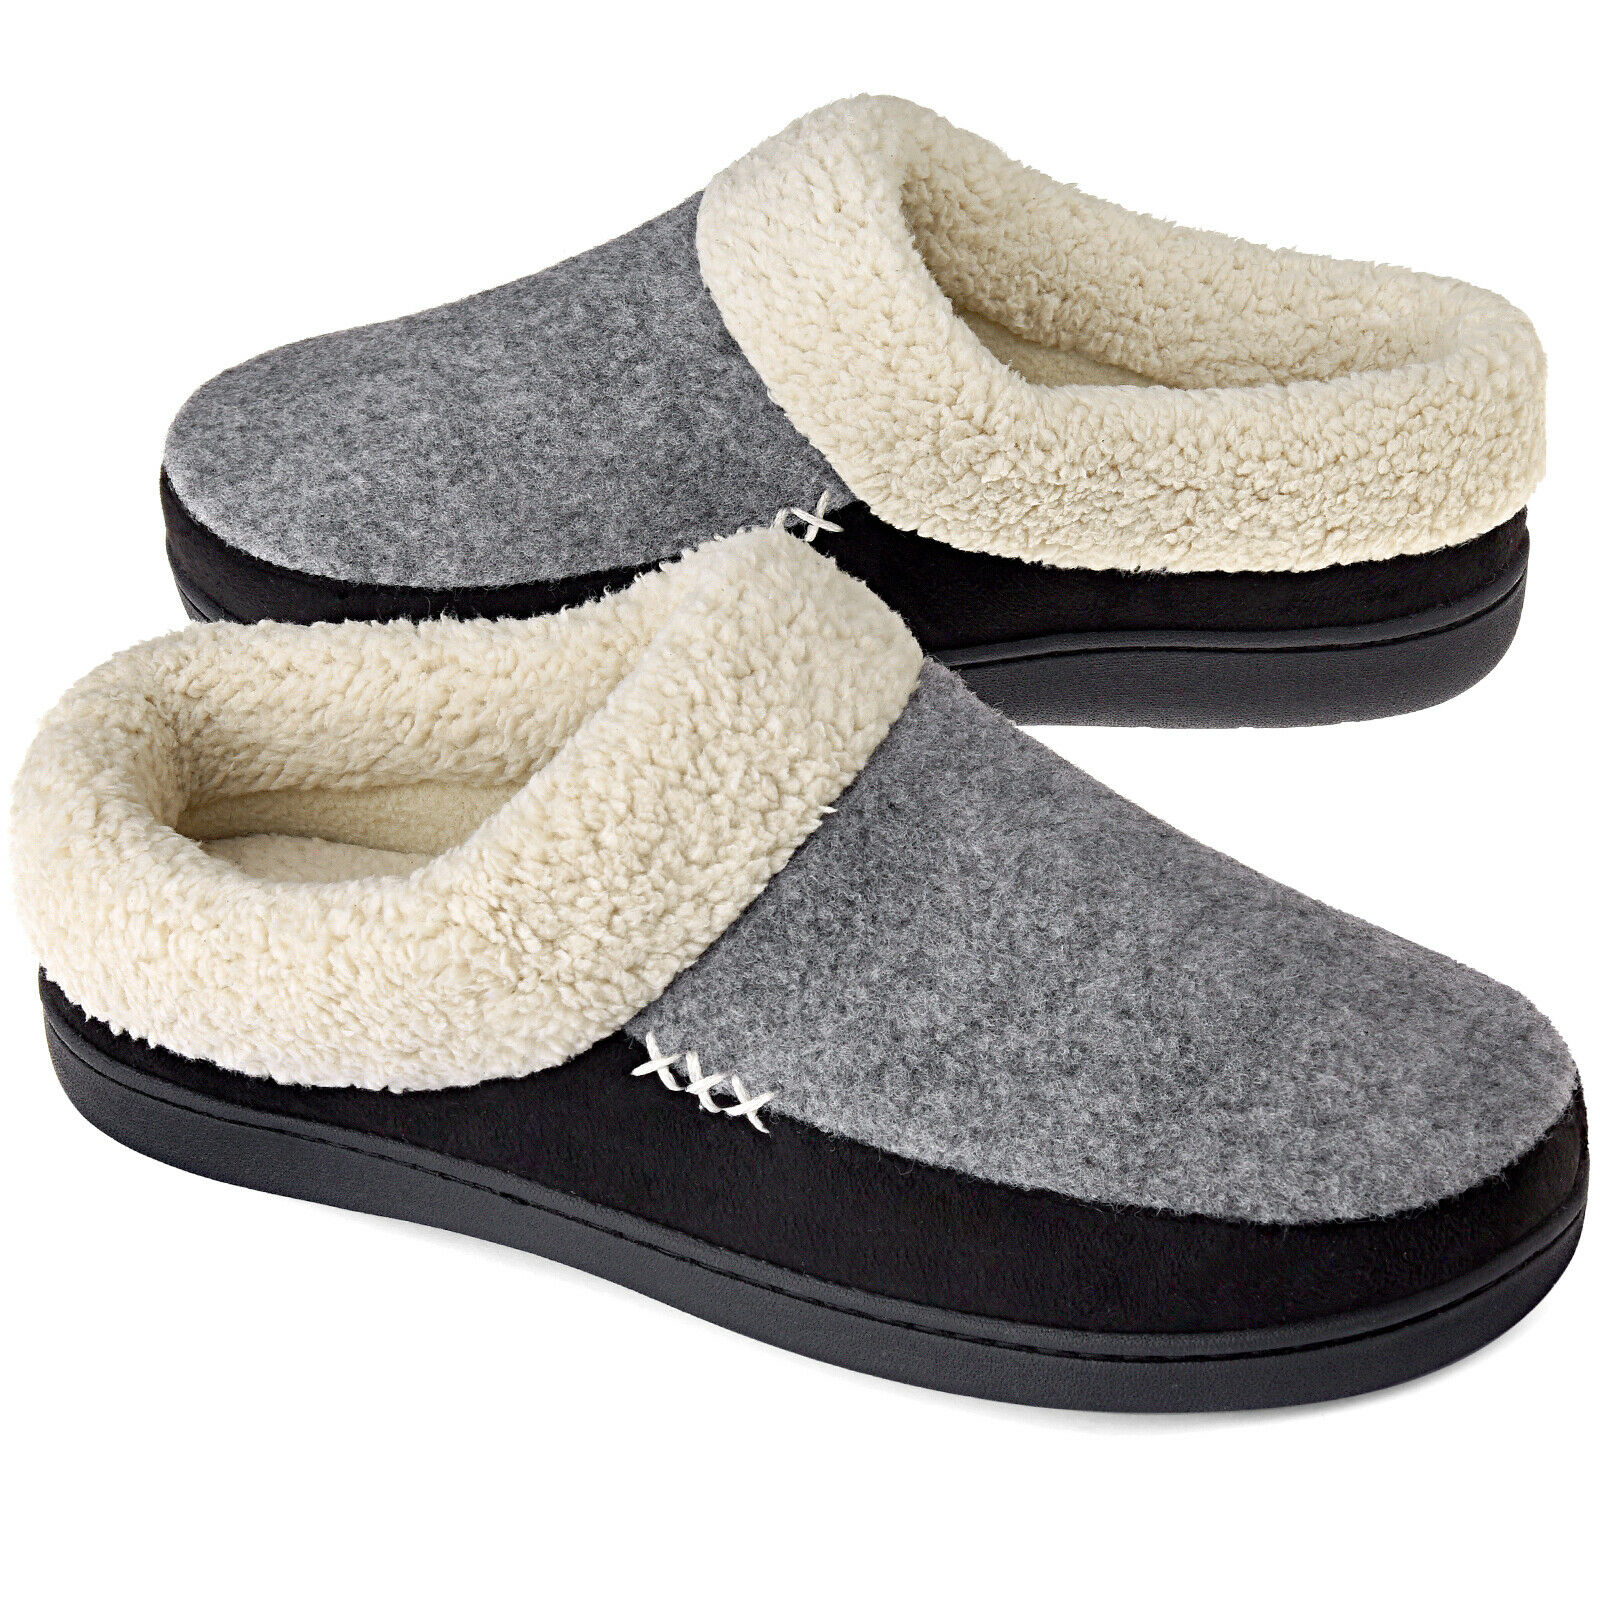 Vonmay Men's Memory Foam Comfort Slippers Wool-like Lining Slip On House Shoes